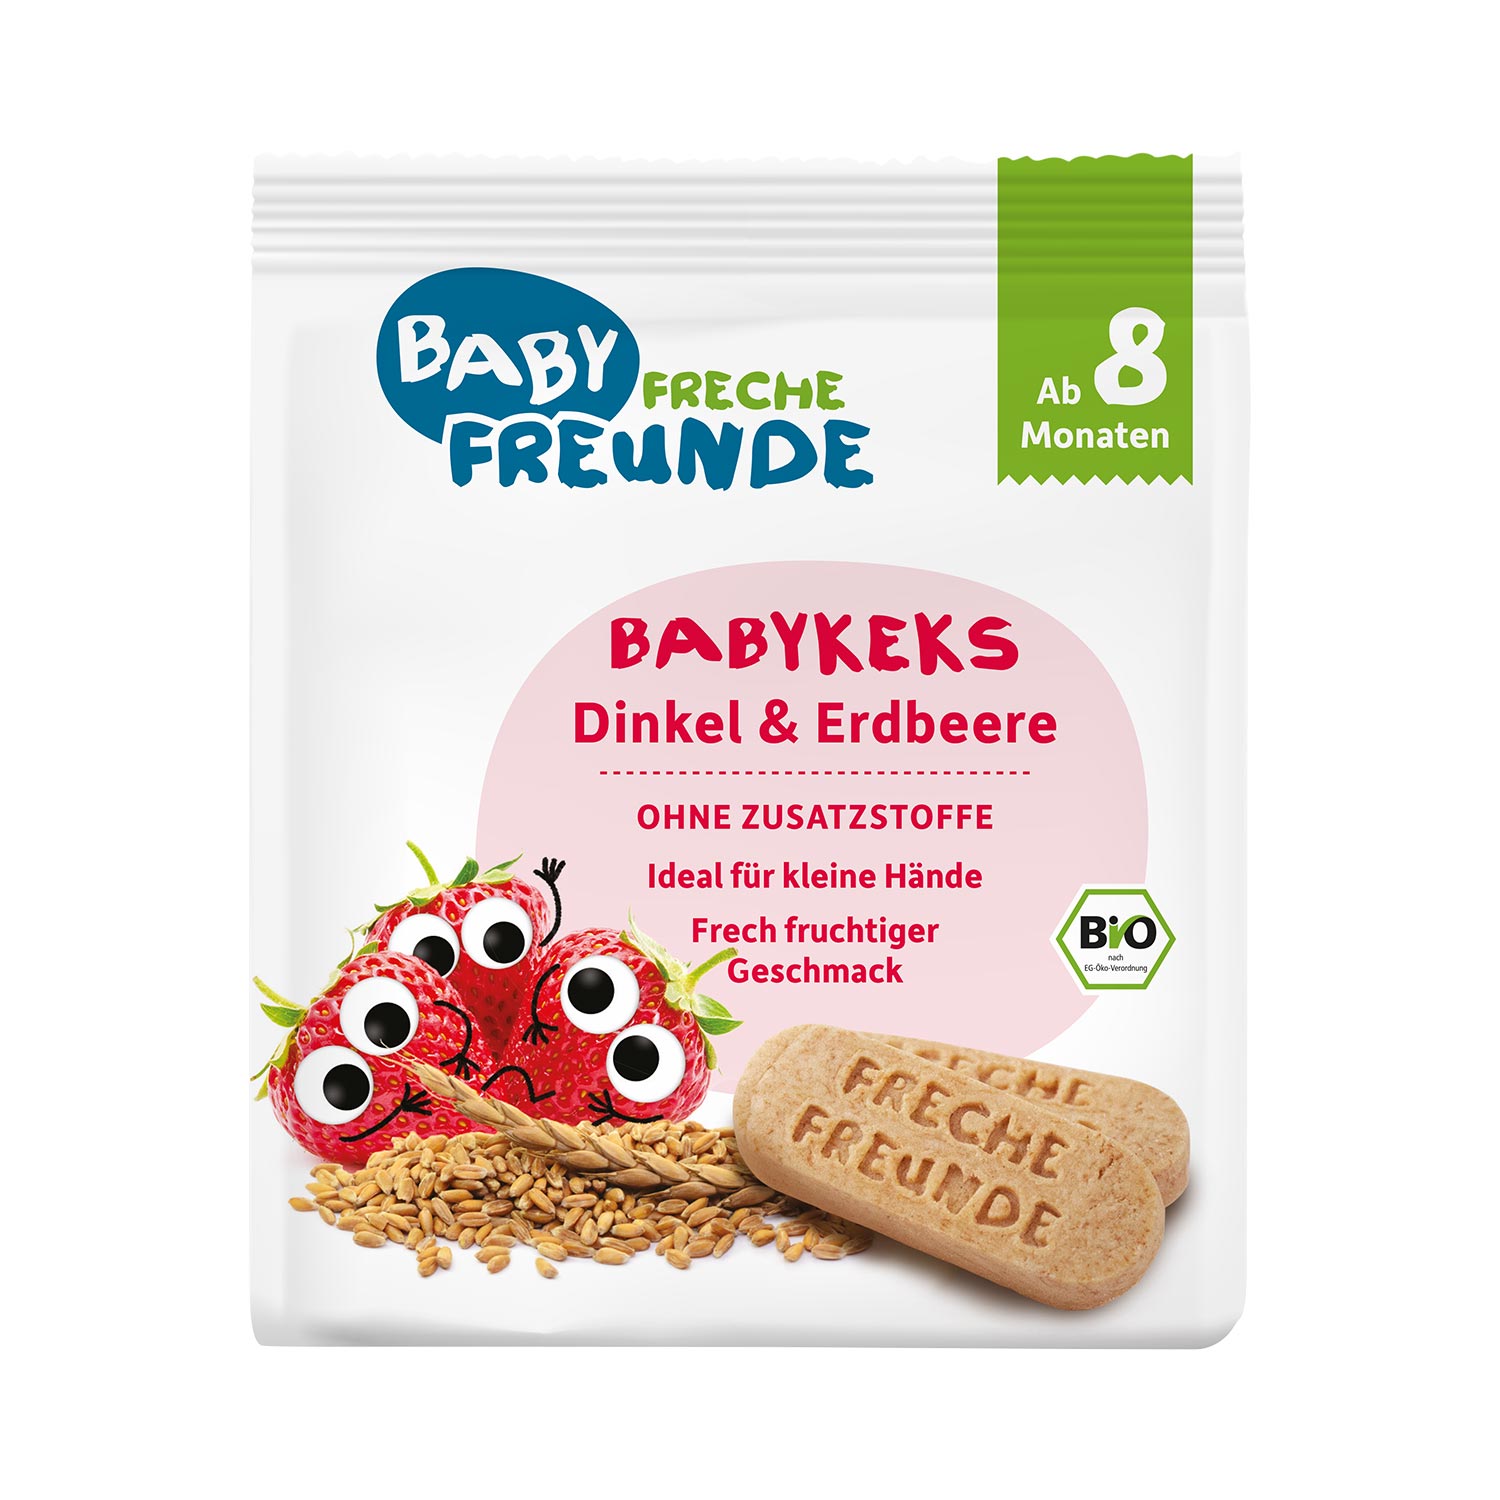 https://frechefreunde.ch/wp-content/uploads/2022/09/baby-freche-freunde-babykeks-dinkel-erdbeere-1.jpg